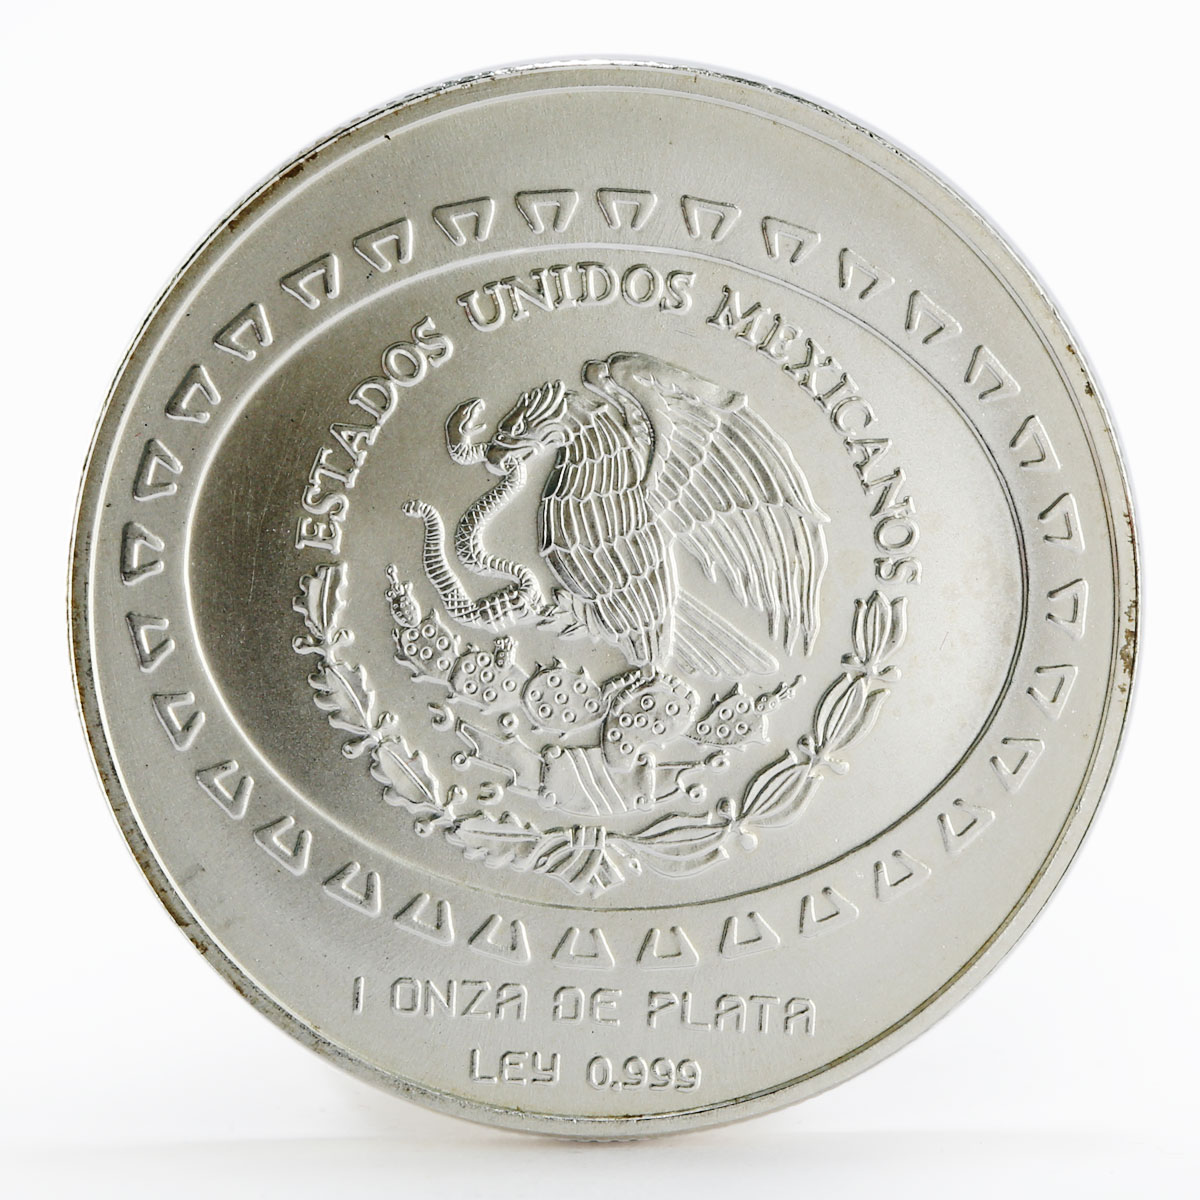 Mexico 5 pesos Teotihuacan Vasija silver coin 1998